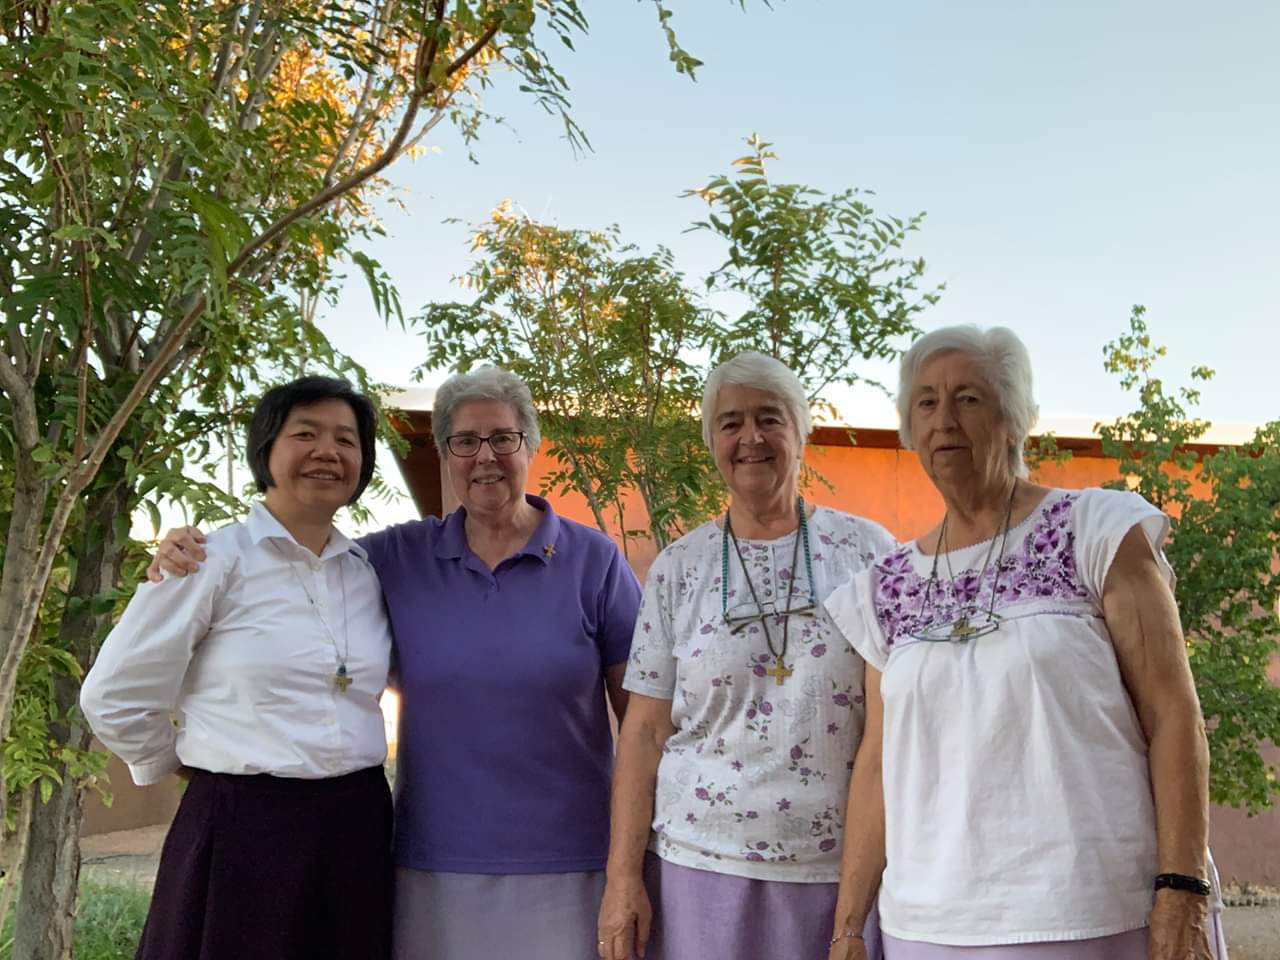 Assumption Sisters of Chaparral, New Mexico, from left: Sister Nha Trang, Sister Diana, Sister Chabela and Sister Tere (Samantha Kominiarek)